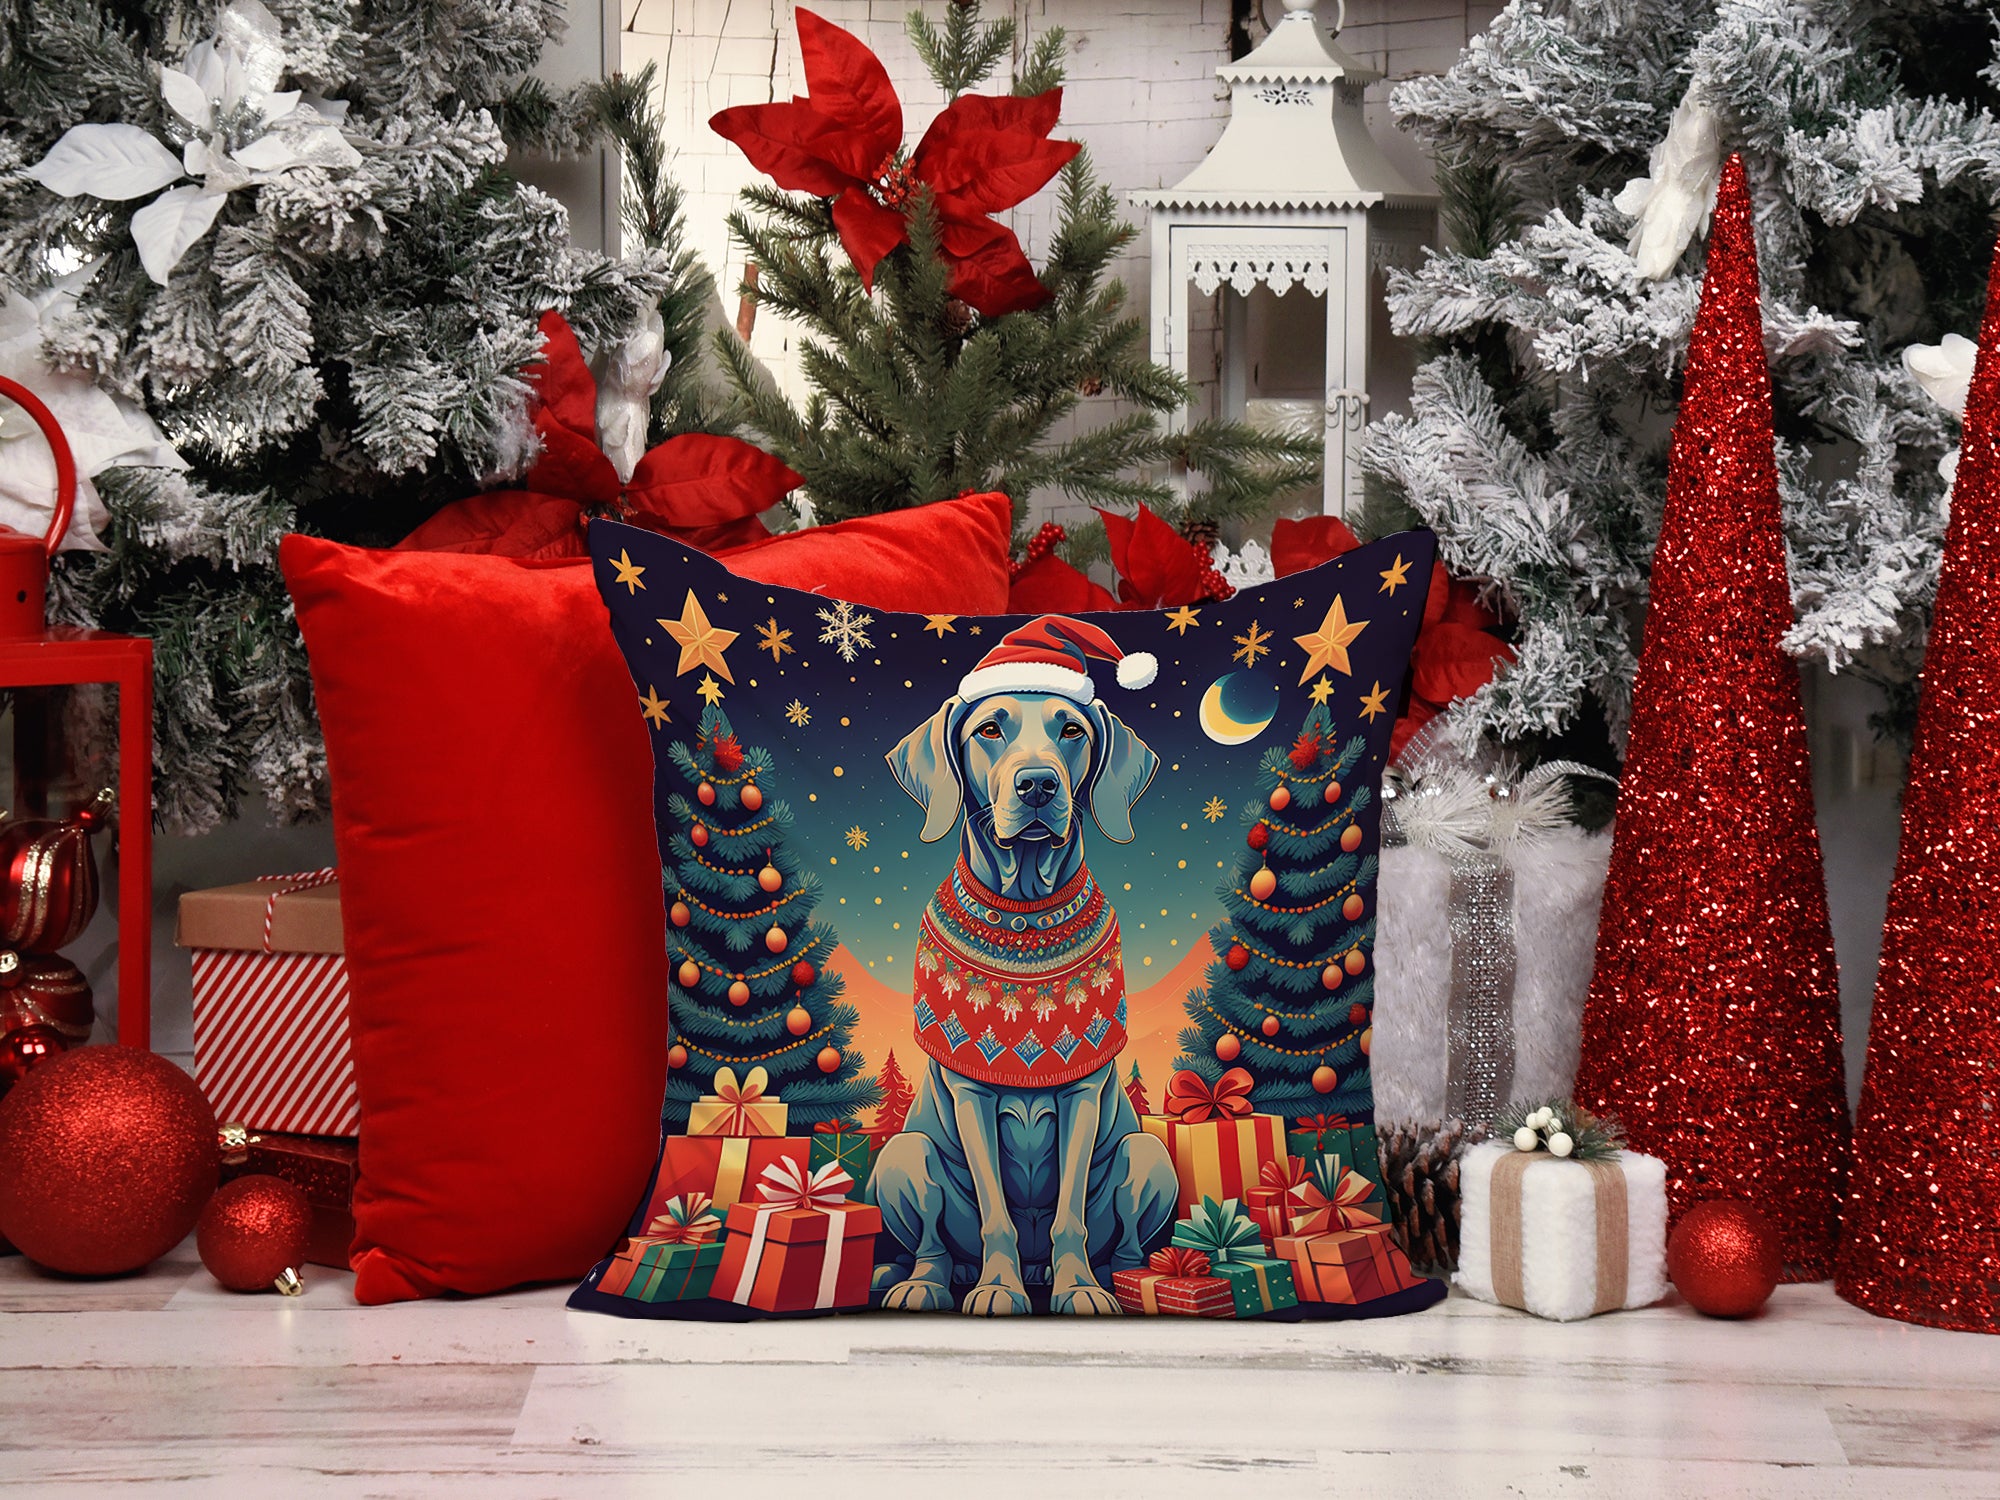 Buy this Weimaraner Christmas Fabric Decorative Pillow